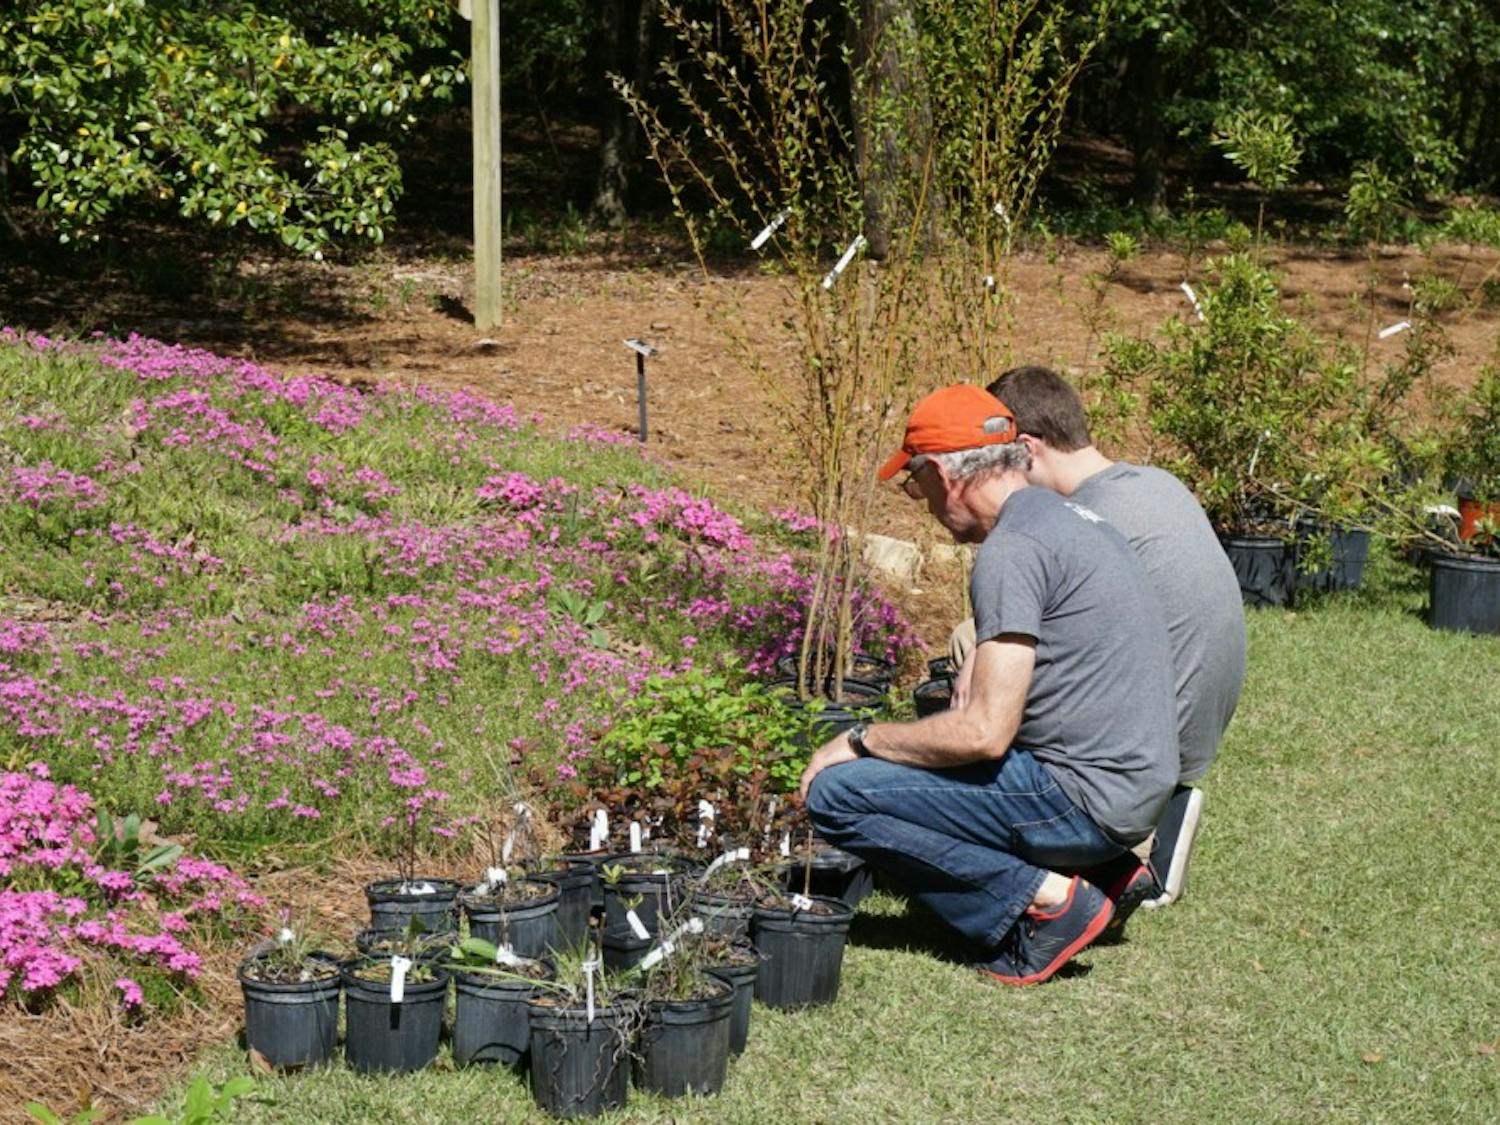 Attendees look to purchase different plants at the Azalea Festival at Auburn University's Donald E. Davis Arboretum on Saturday, March 31, 2018, in Auburn, Ala.